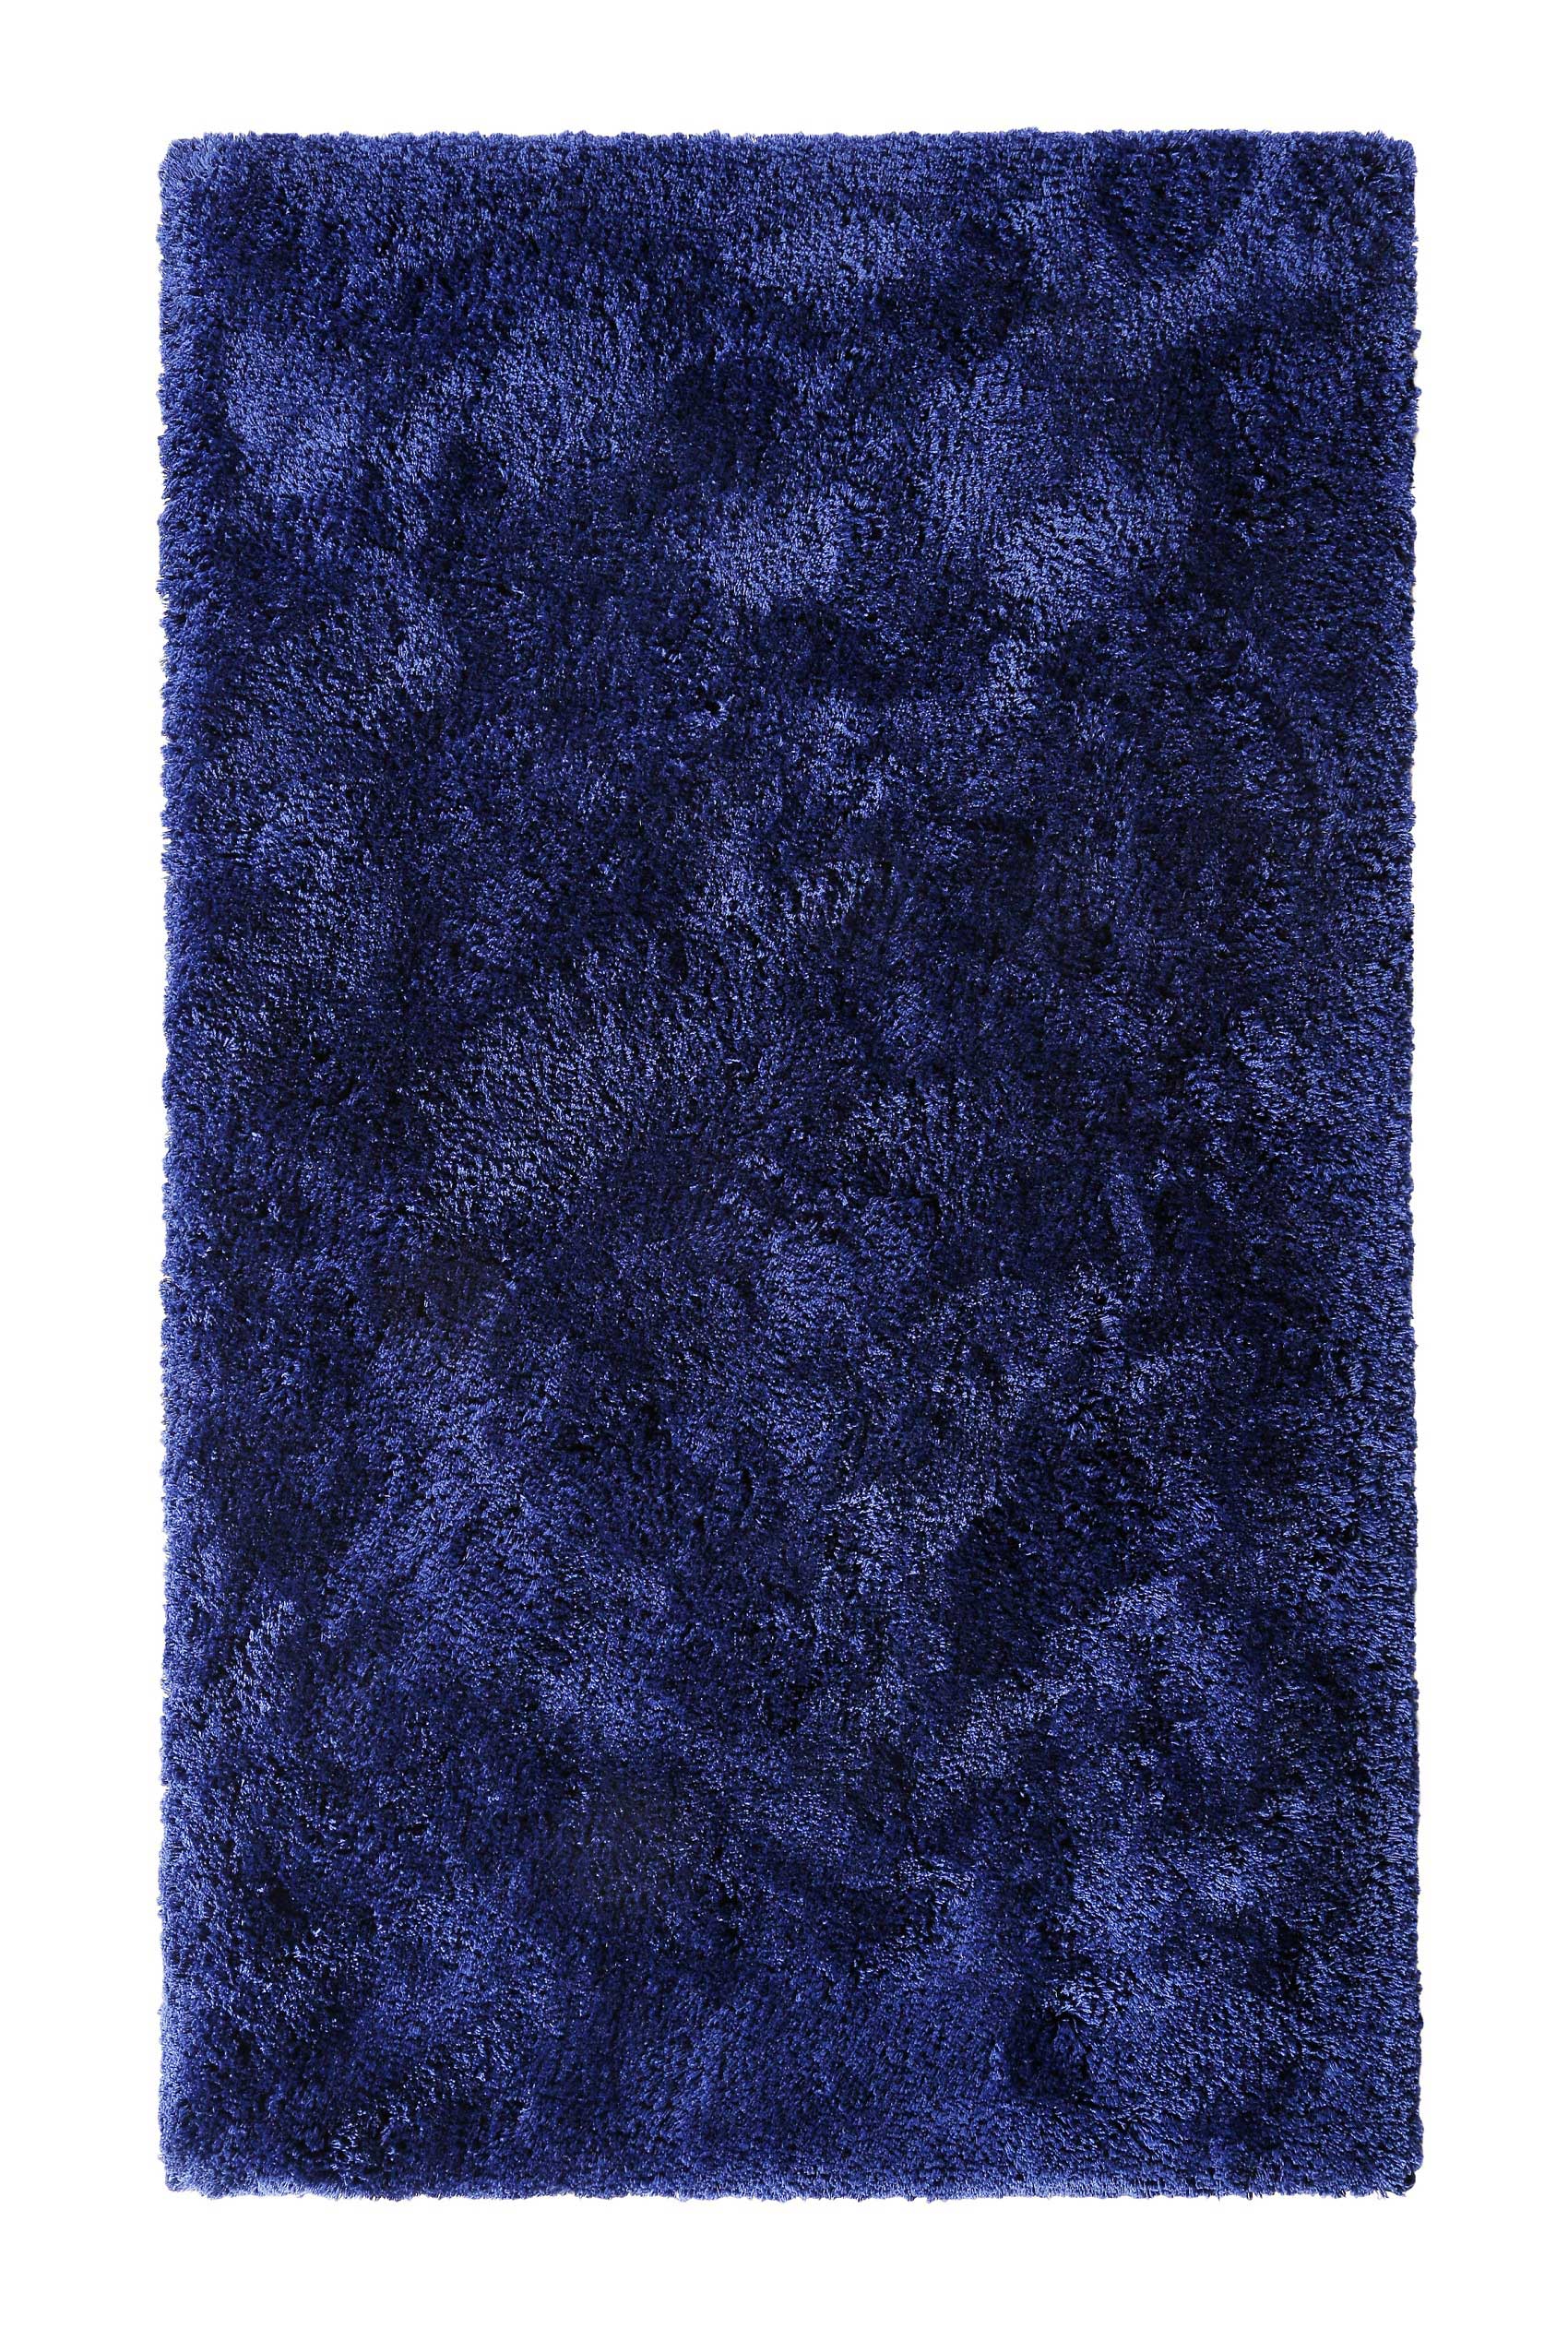 Tapis de bain microfibre antidérapant bleu marine 55x65